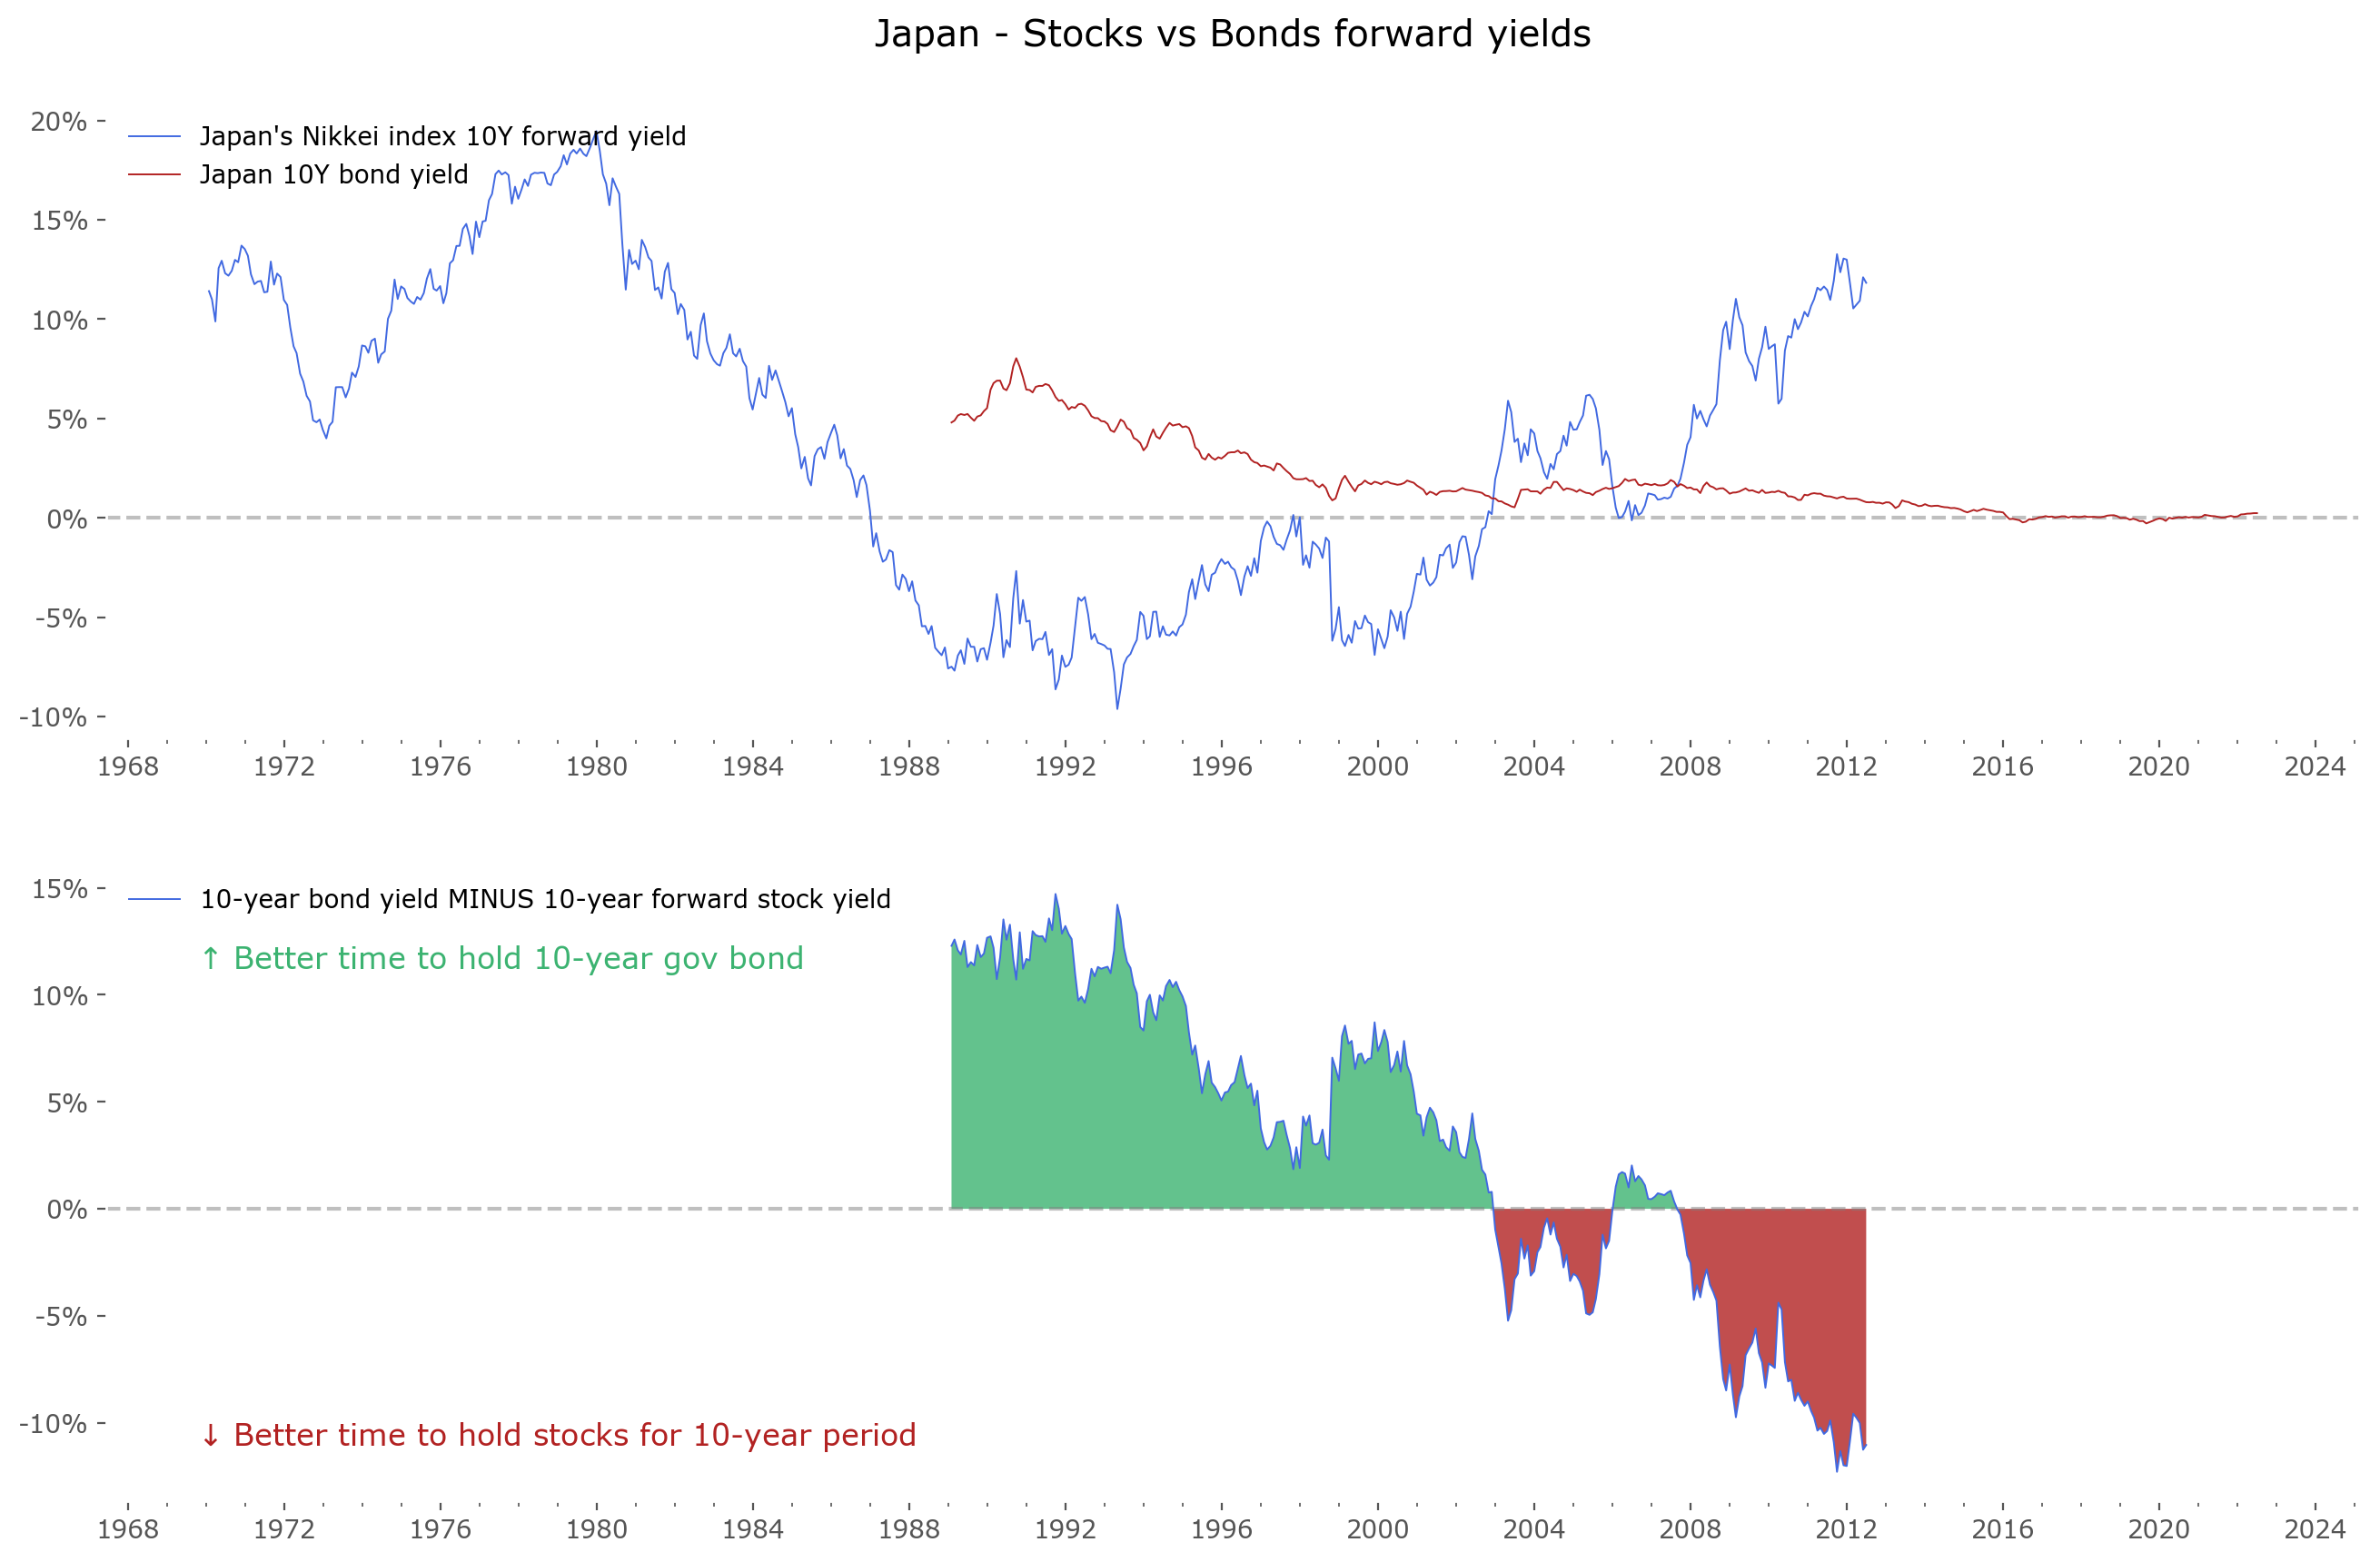 Japan, Nikkei index